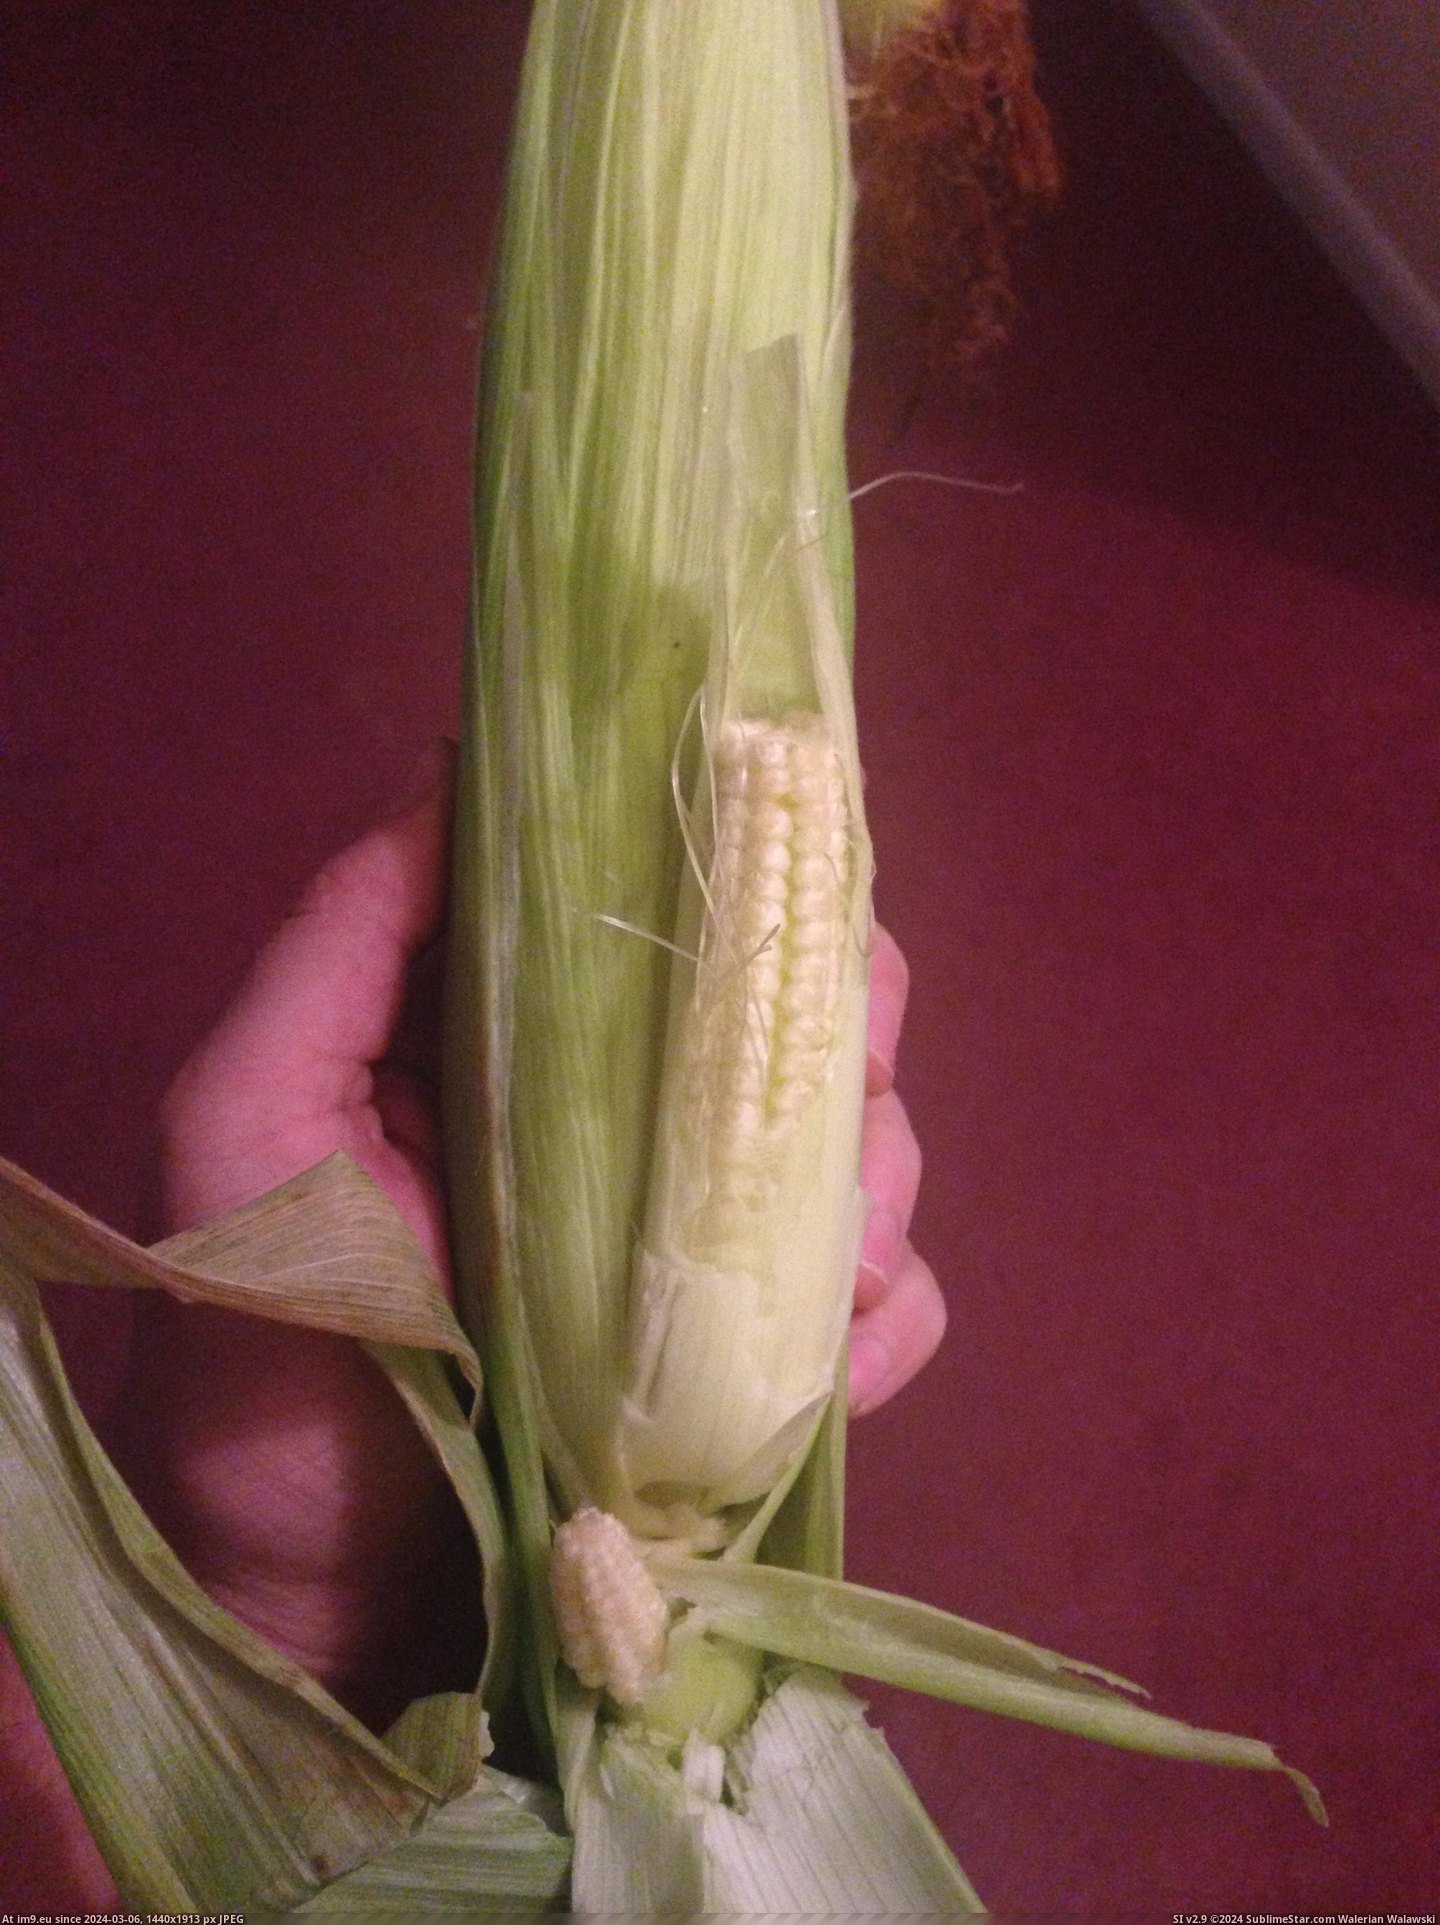 #Had #Smaller #Corn #Growing [Mildlyinteresting] My corn had a smaller and smaller corn growing inside it Pic. (Изображение из альбом My r/MILDLYINTERESTING favs))